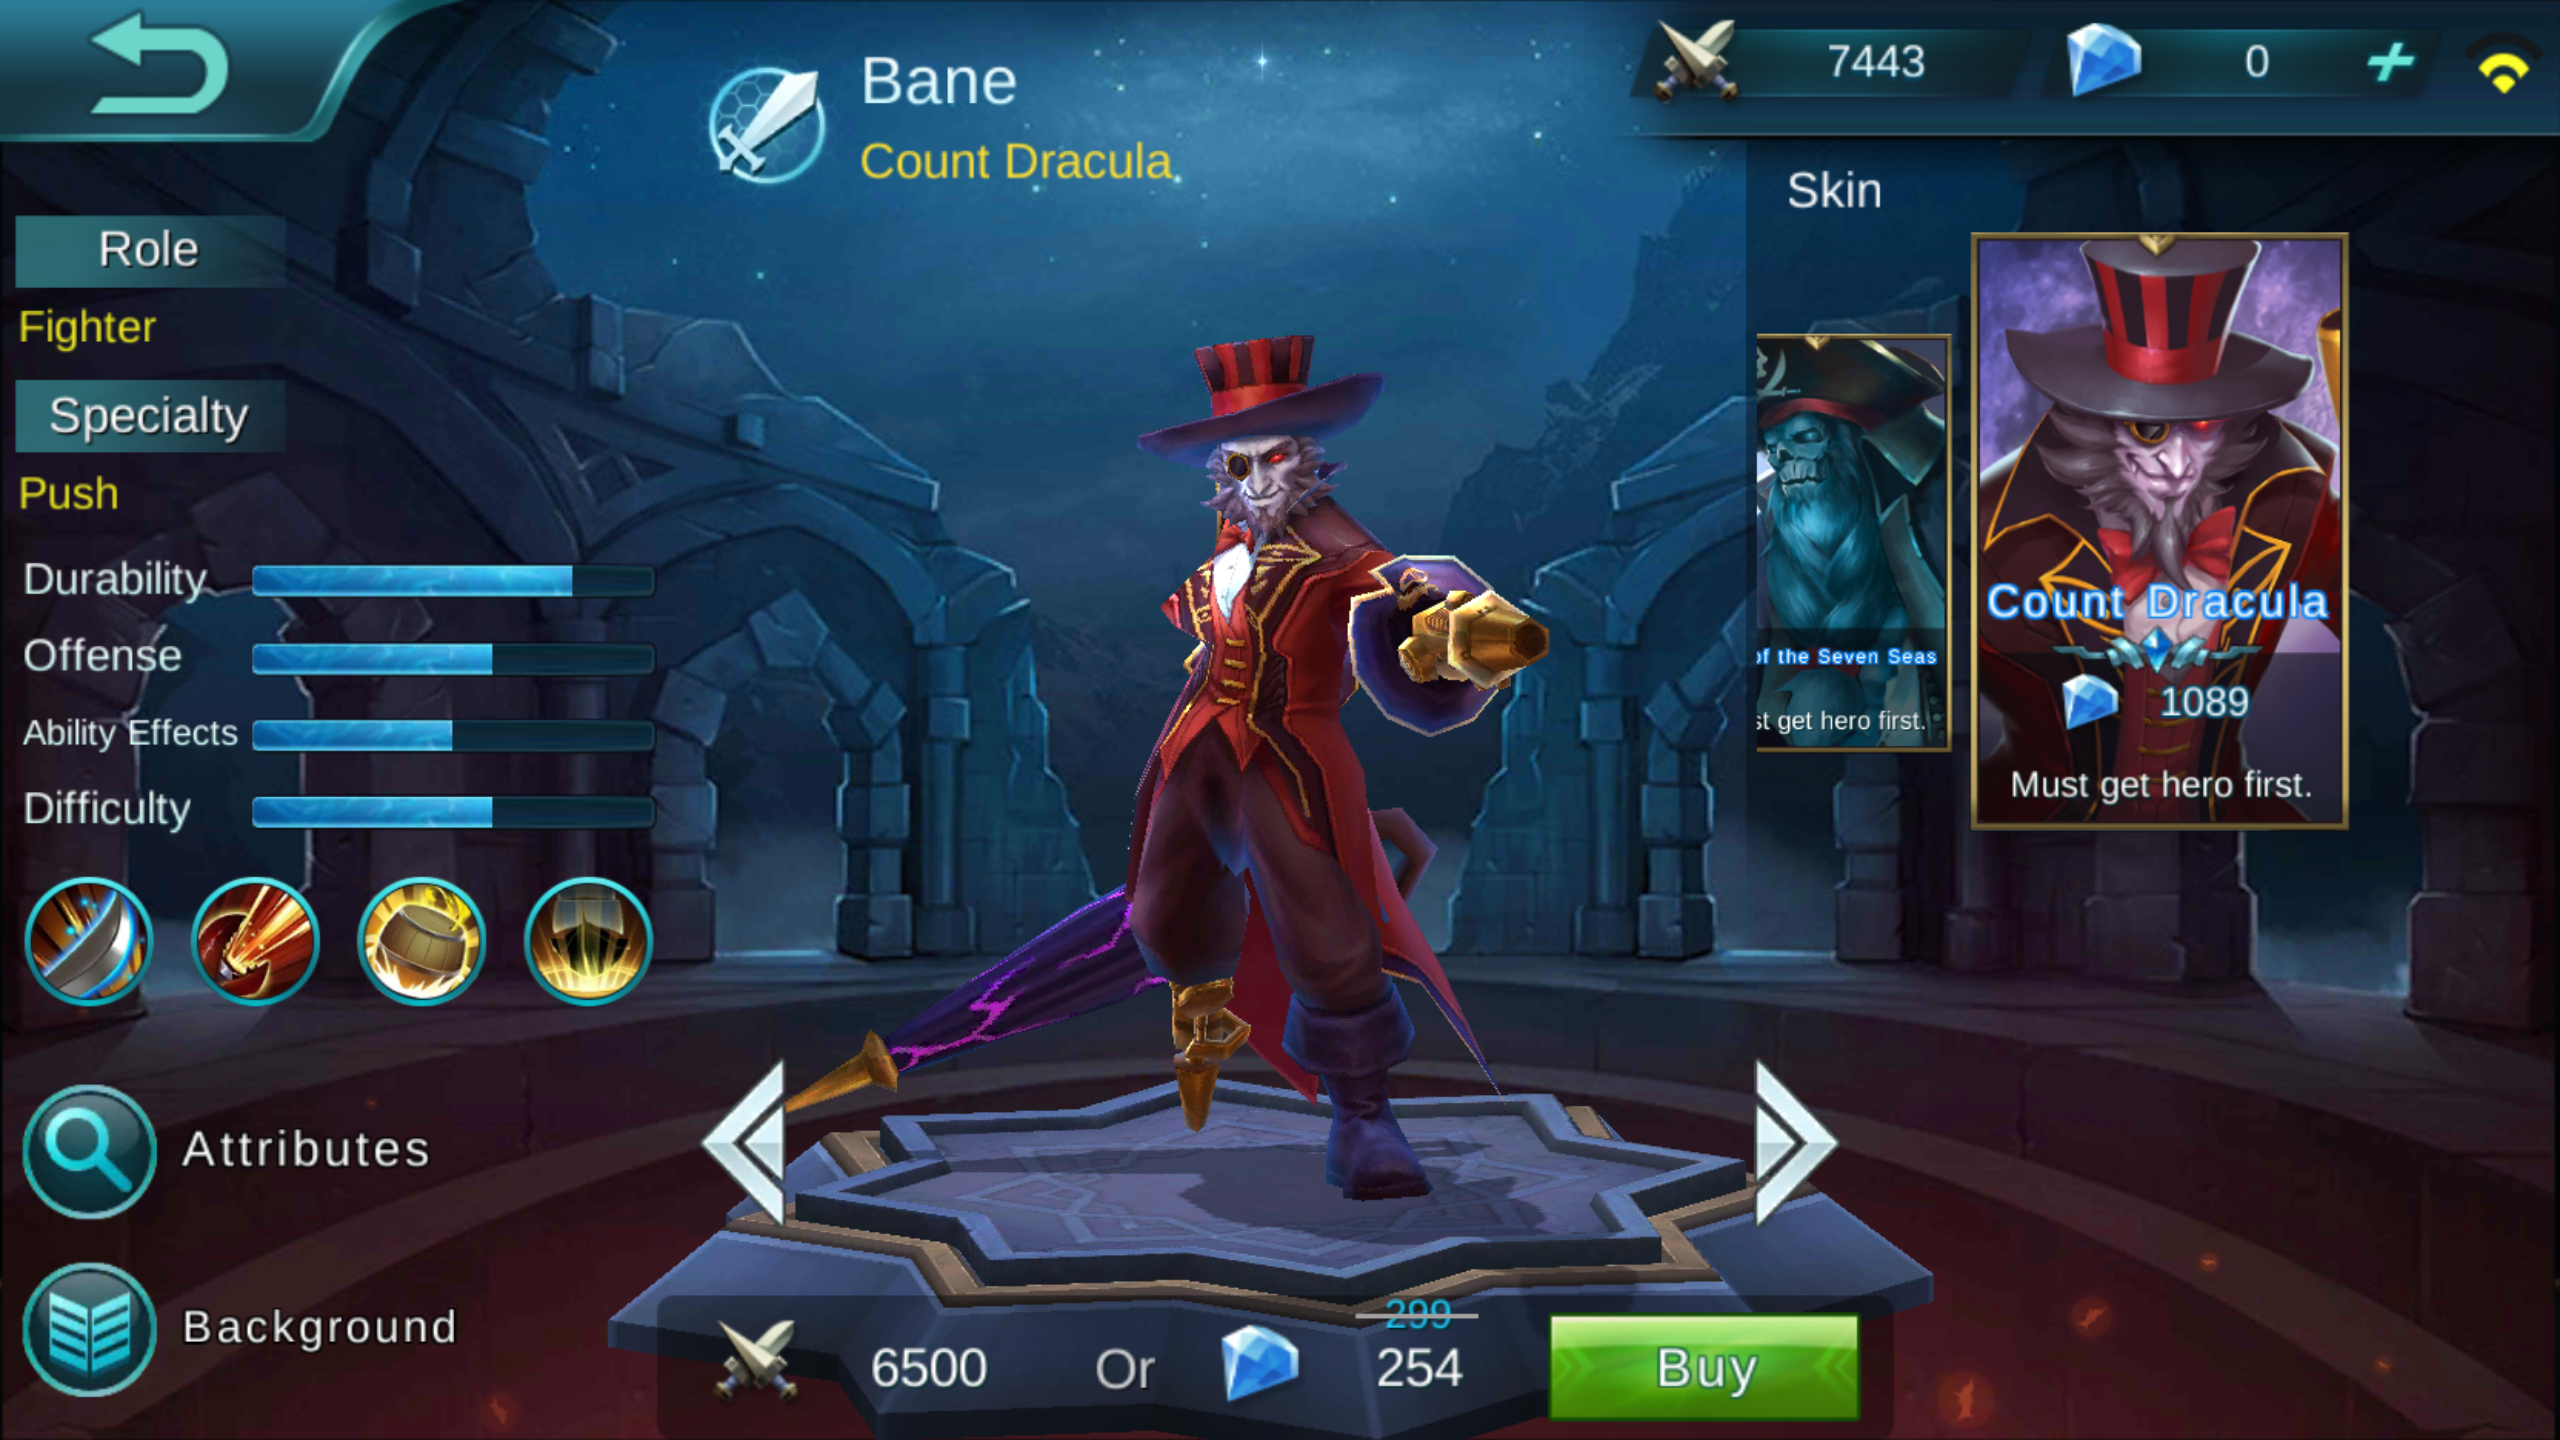 Bane Lord Of The Seven Seas Review Mobile Legends Bang Bang